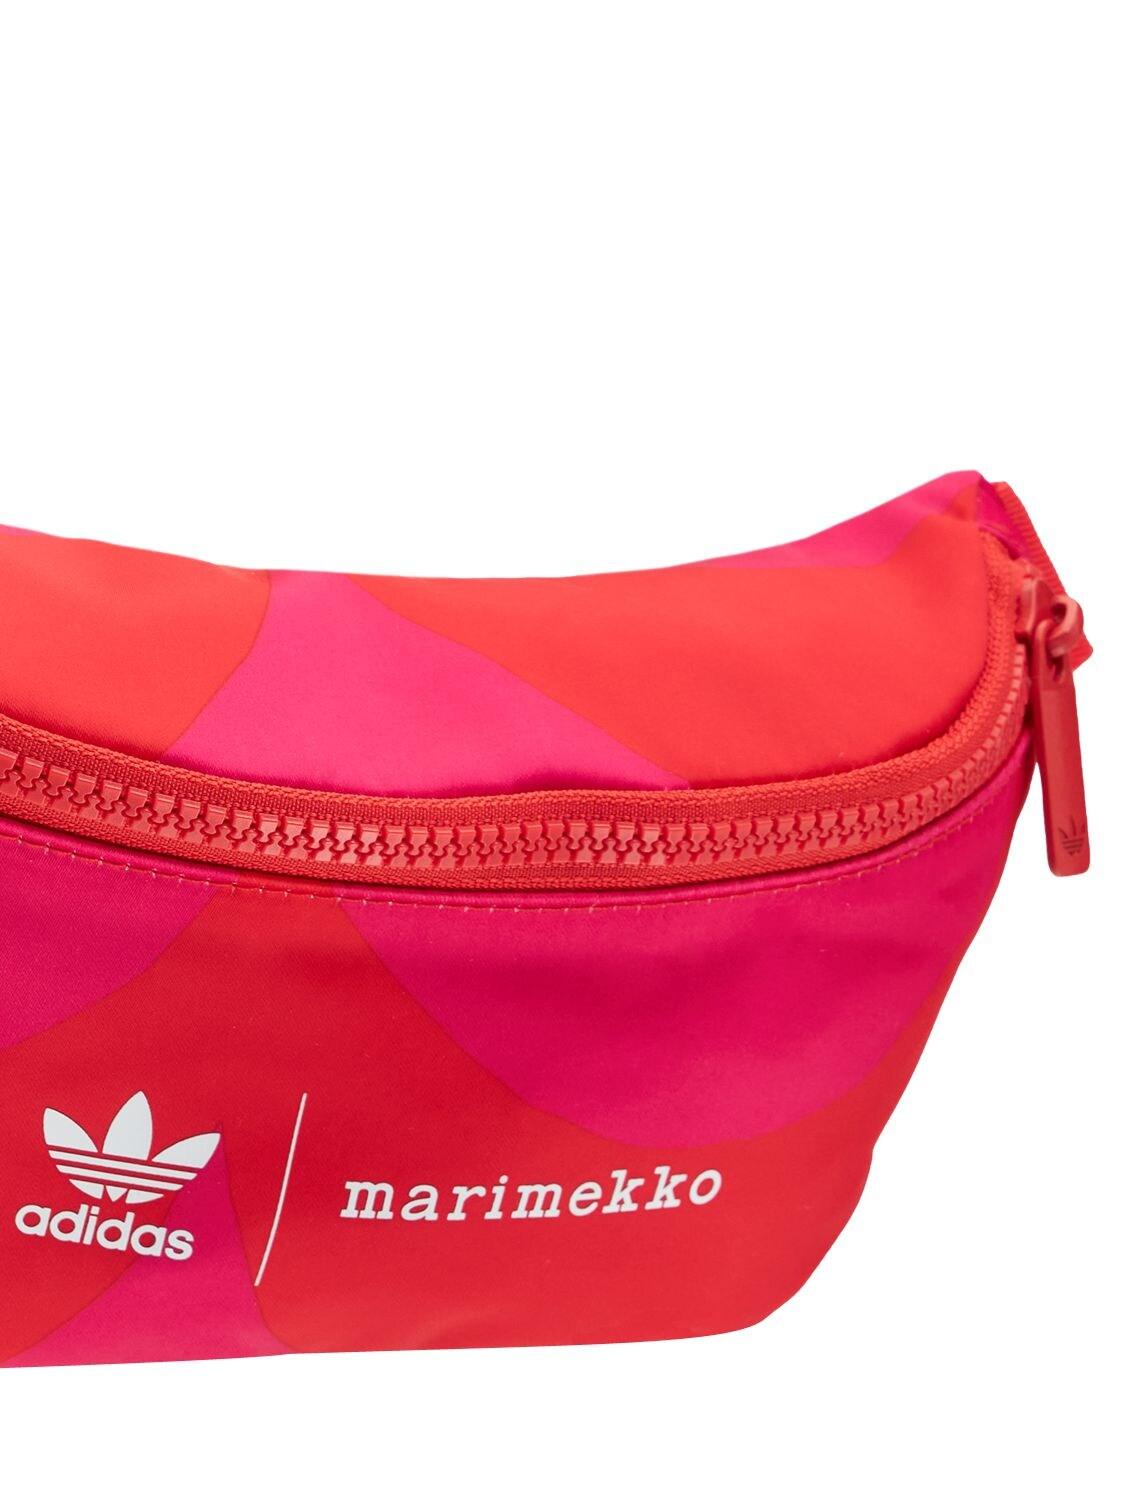 adidas Originals Marimekko Belt Bag in Red,Fuchsia (Red) | Lyst Australia